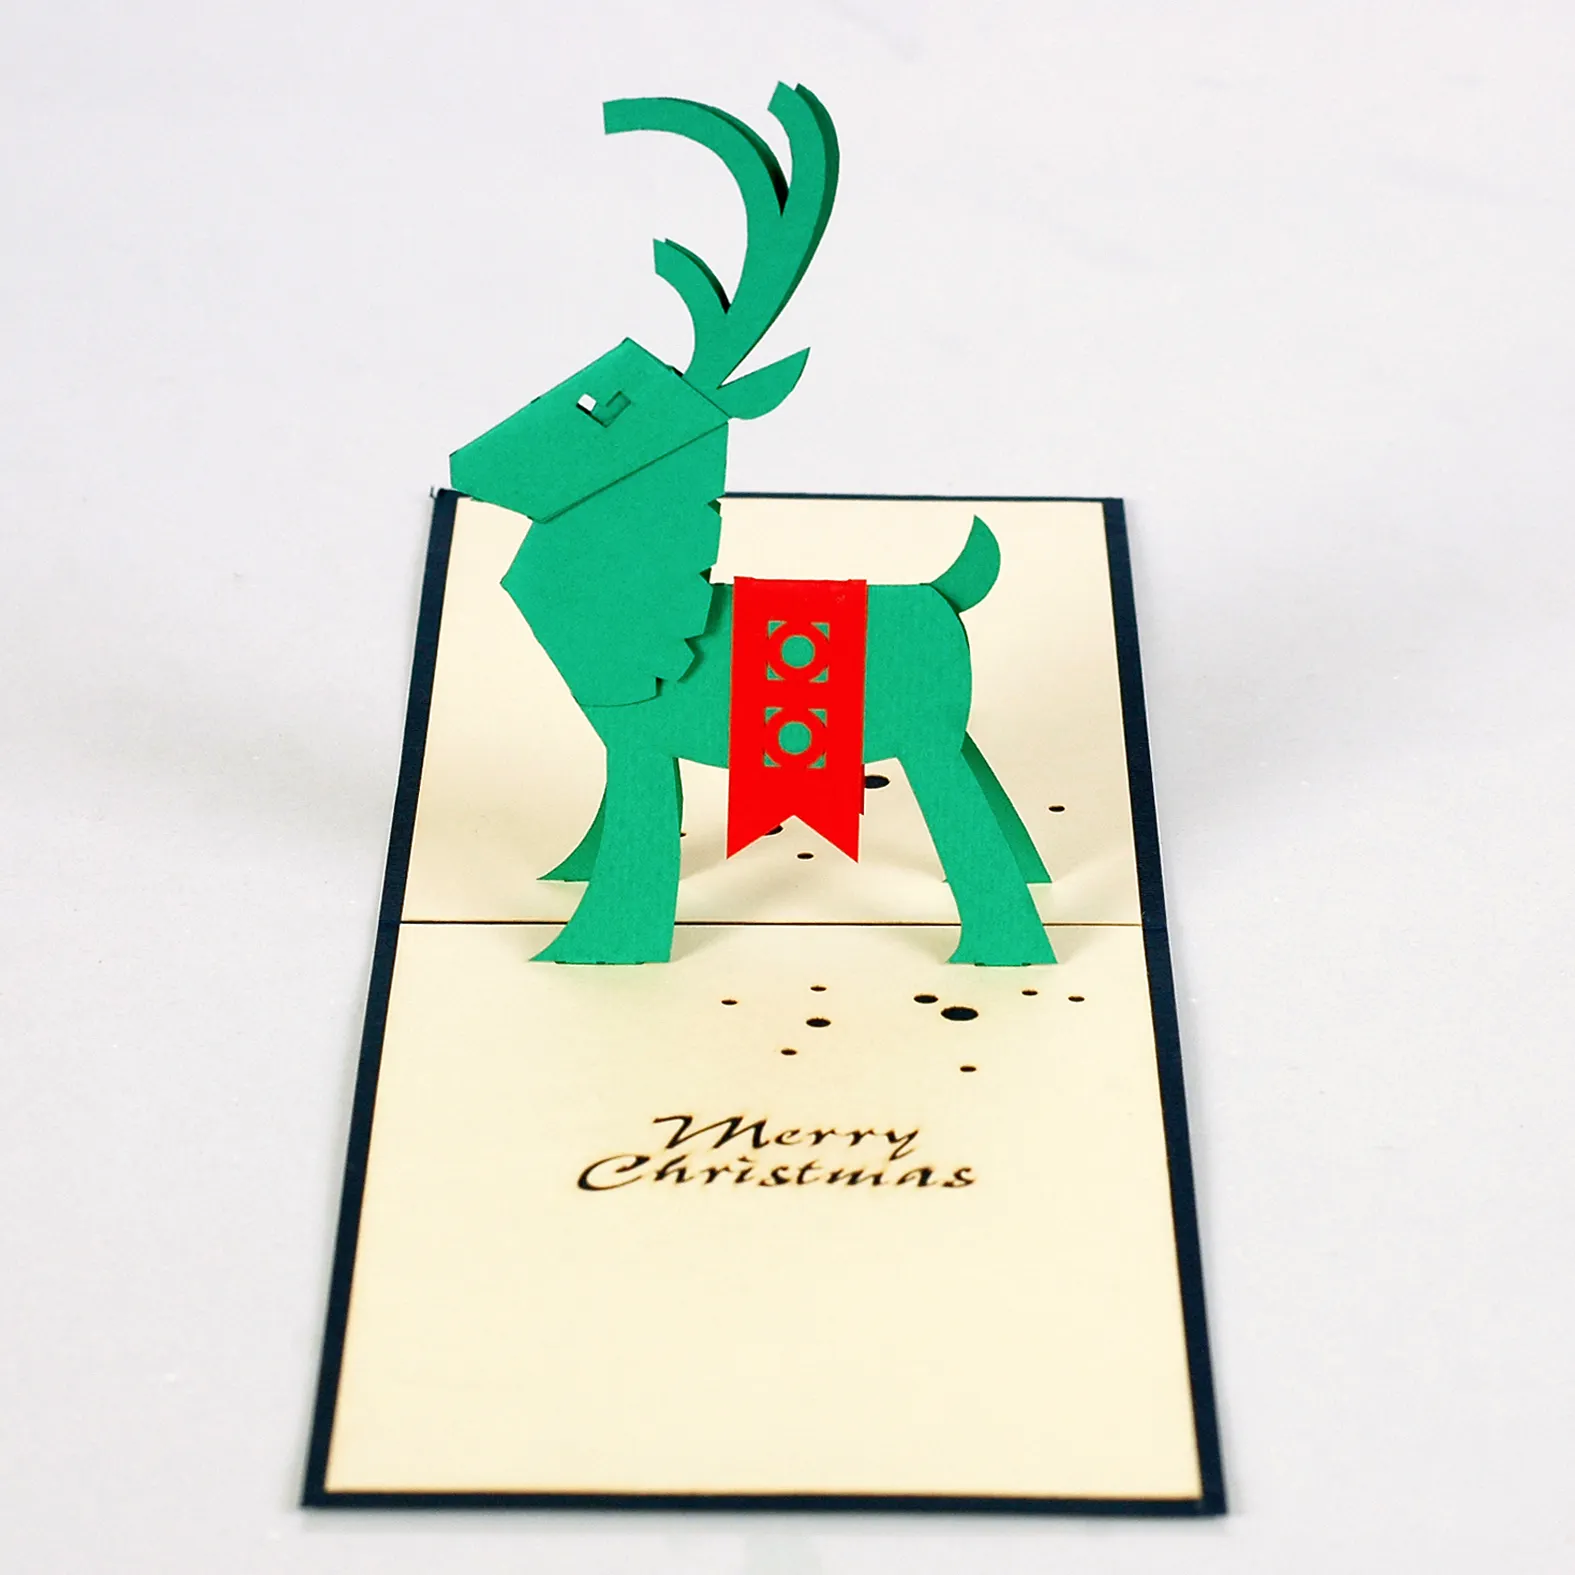 Reindeer 3D pop up model to merry Christmas 3D greeting card Handmade gifts pop up 3D cards